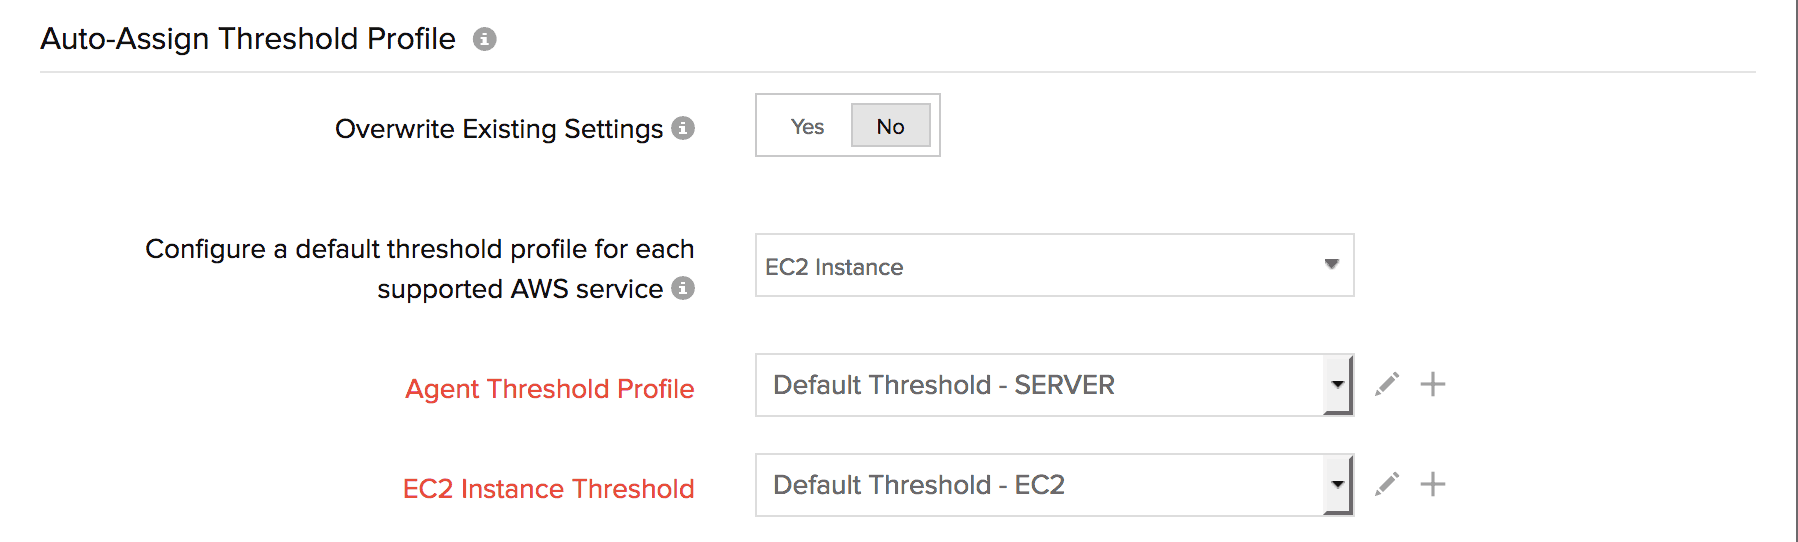 Auto assign threshold profile for EC2 instance